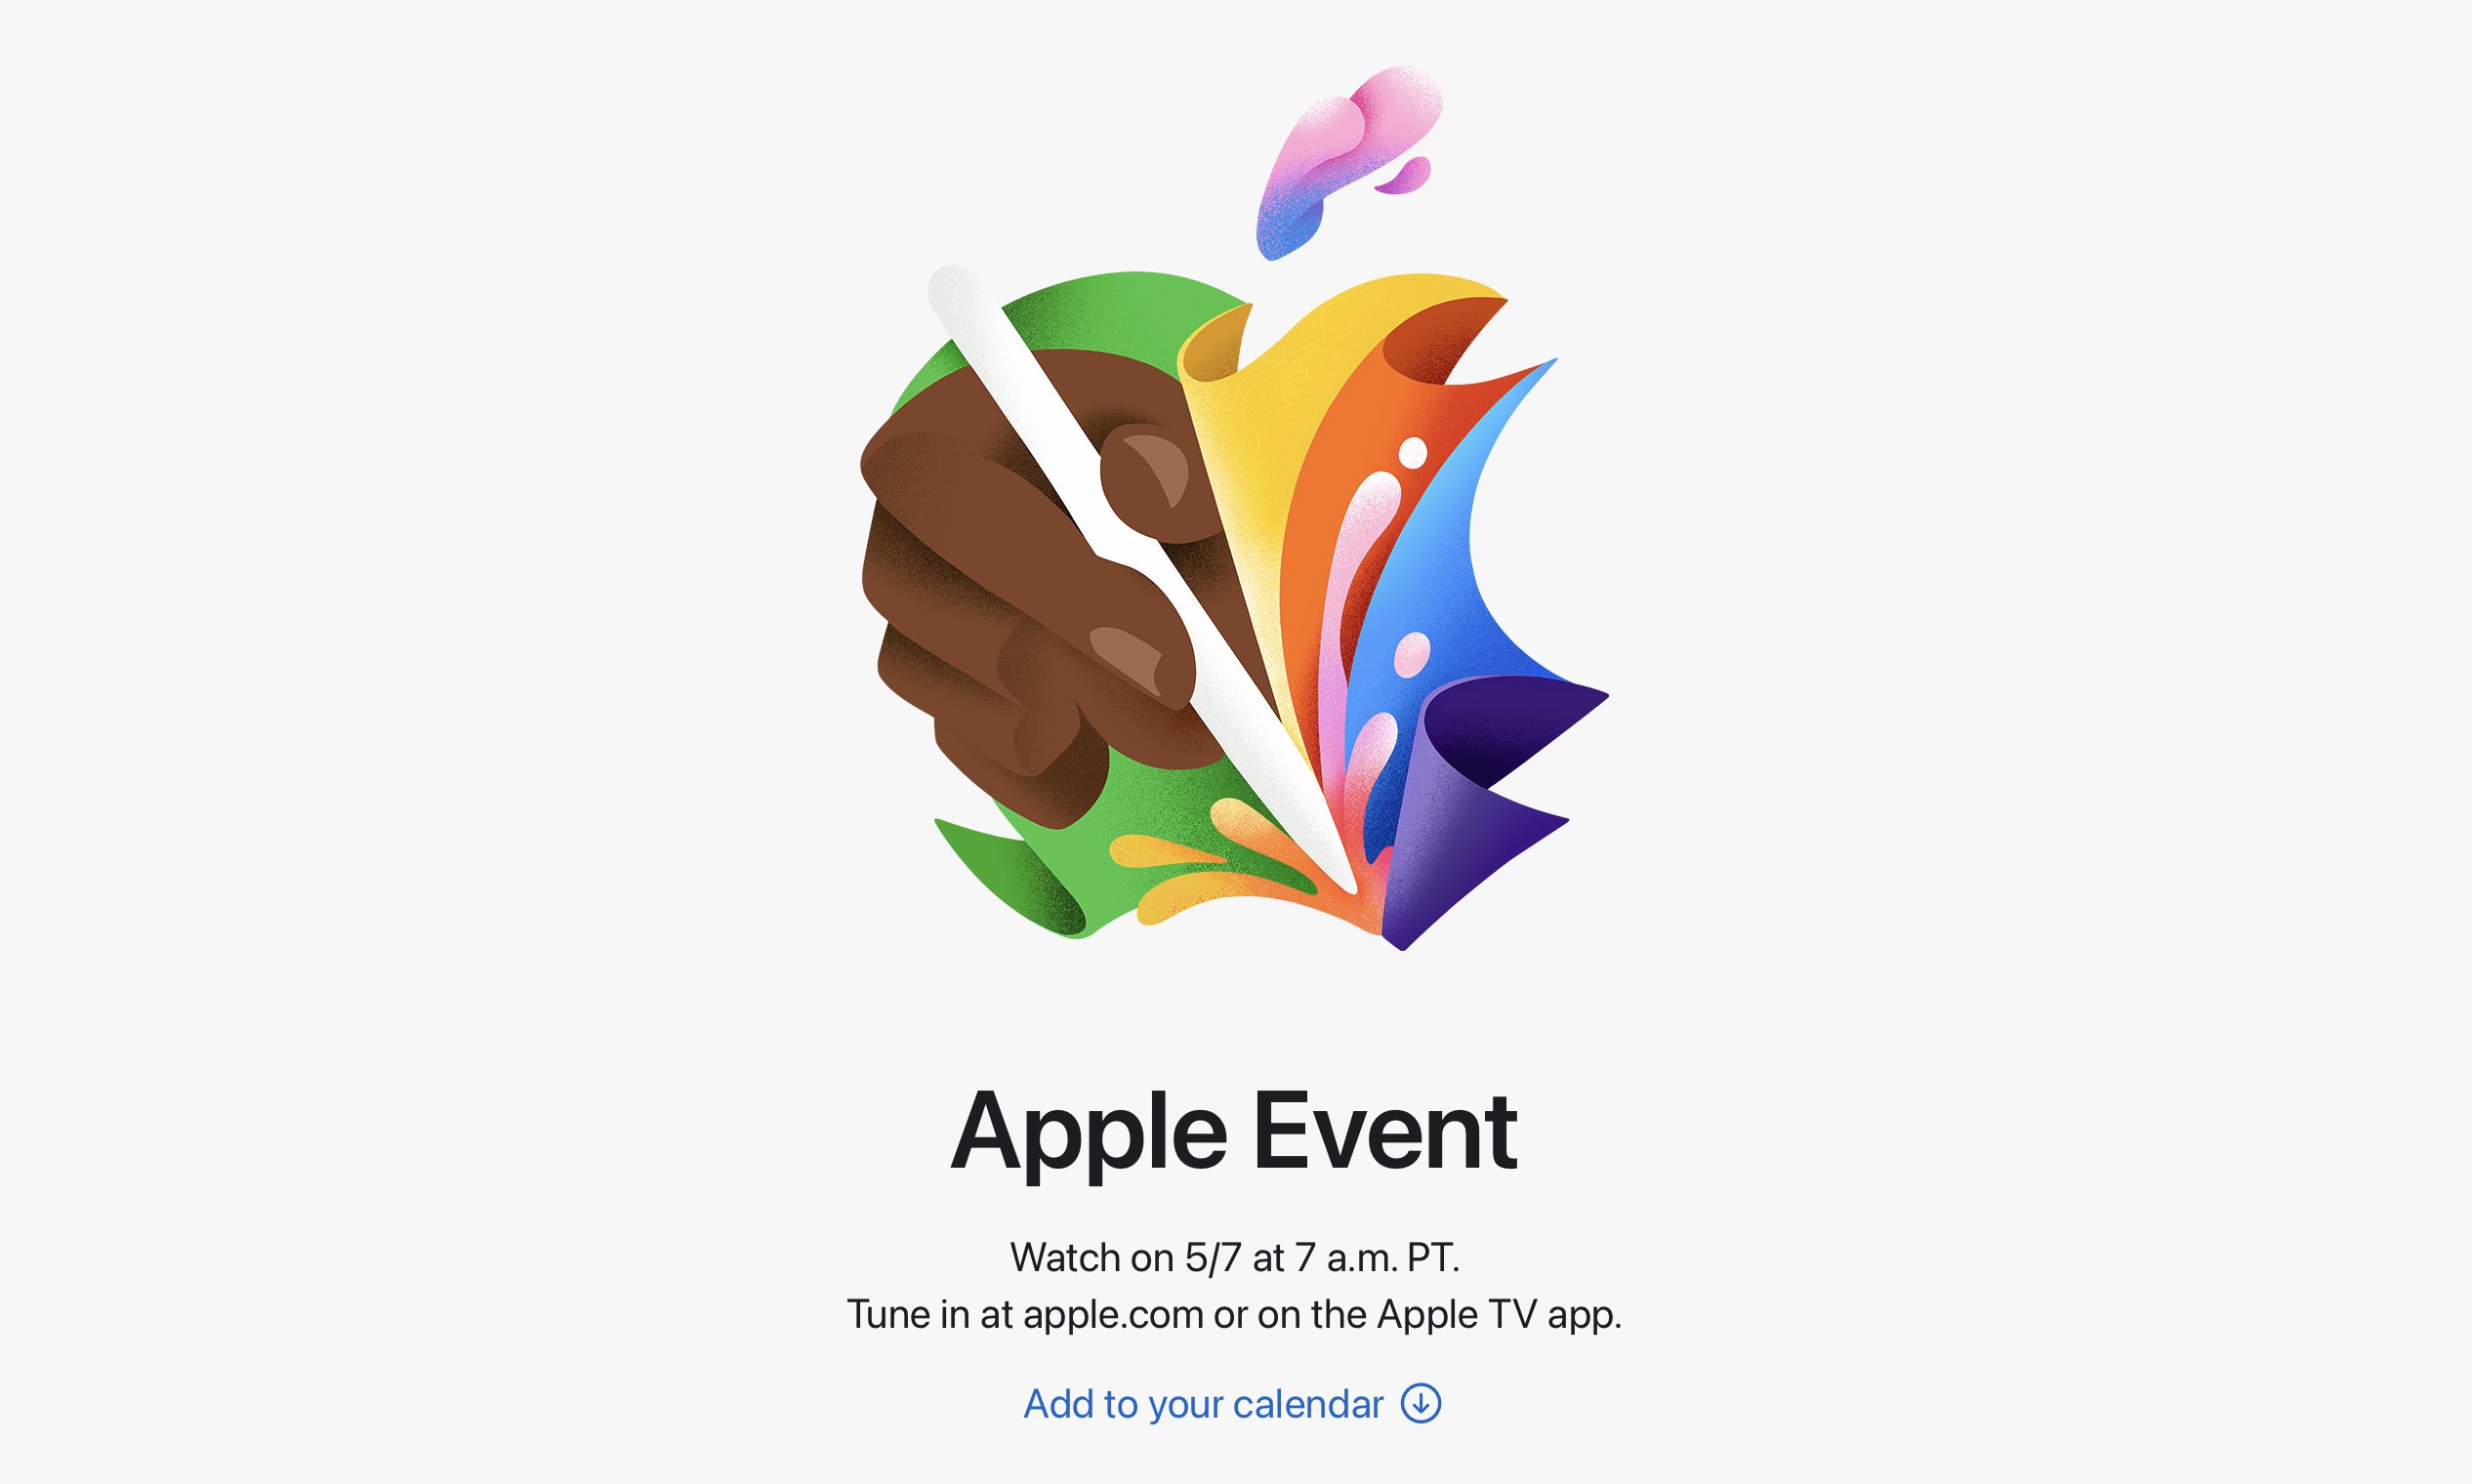 apple events website let loose